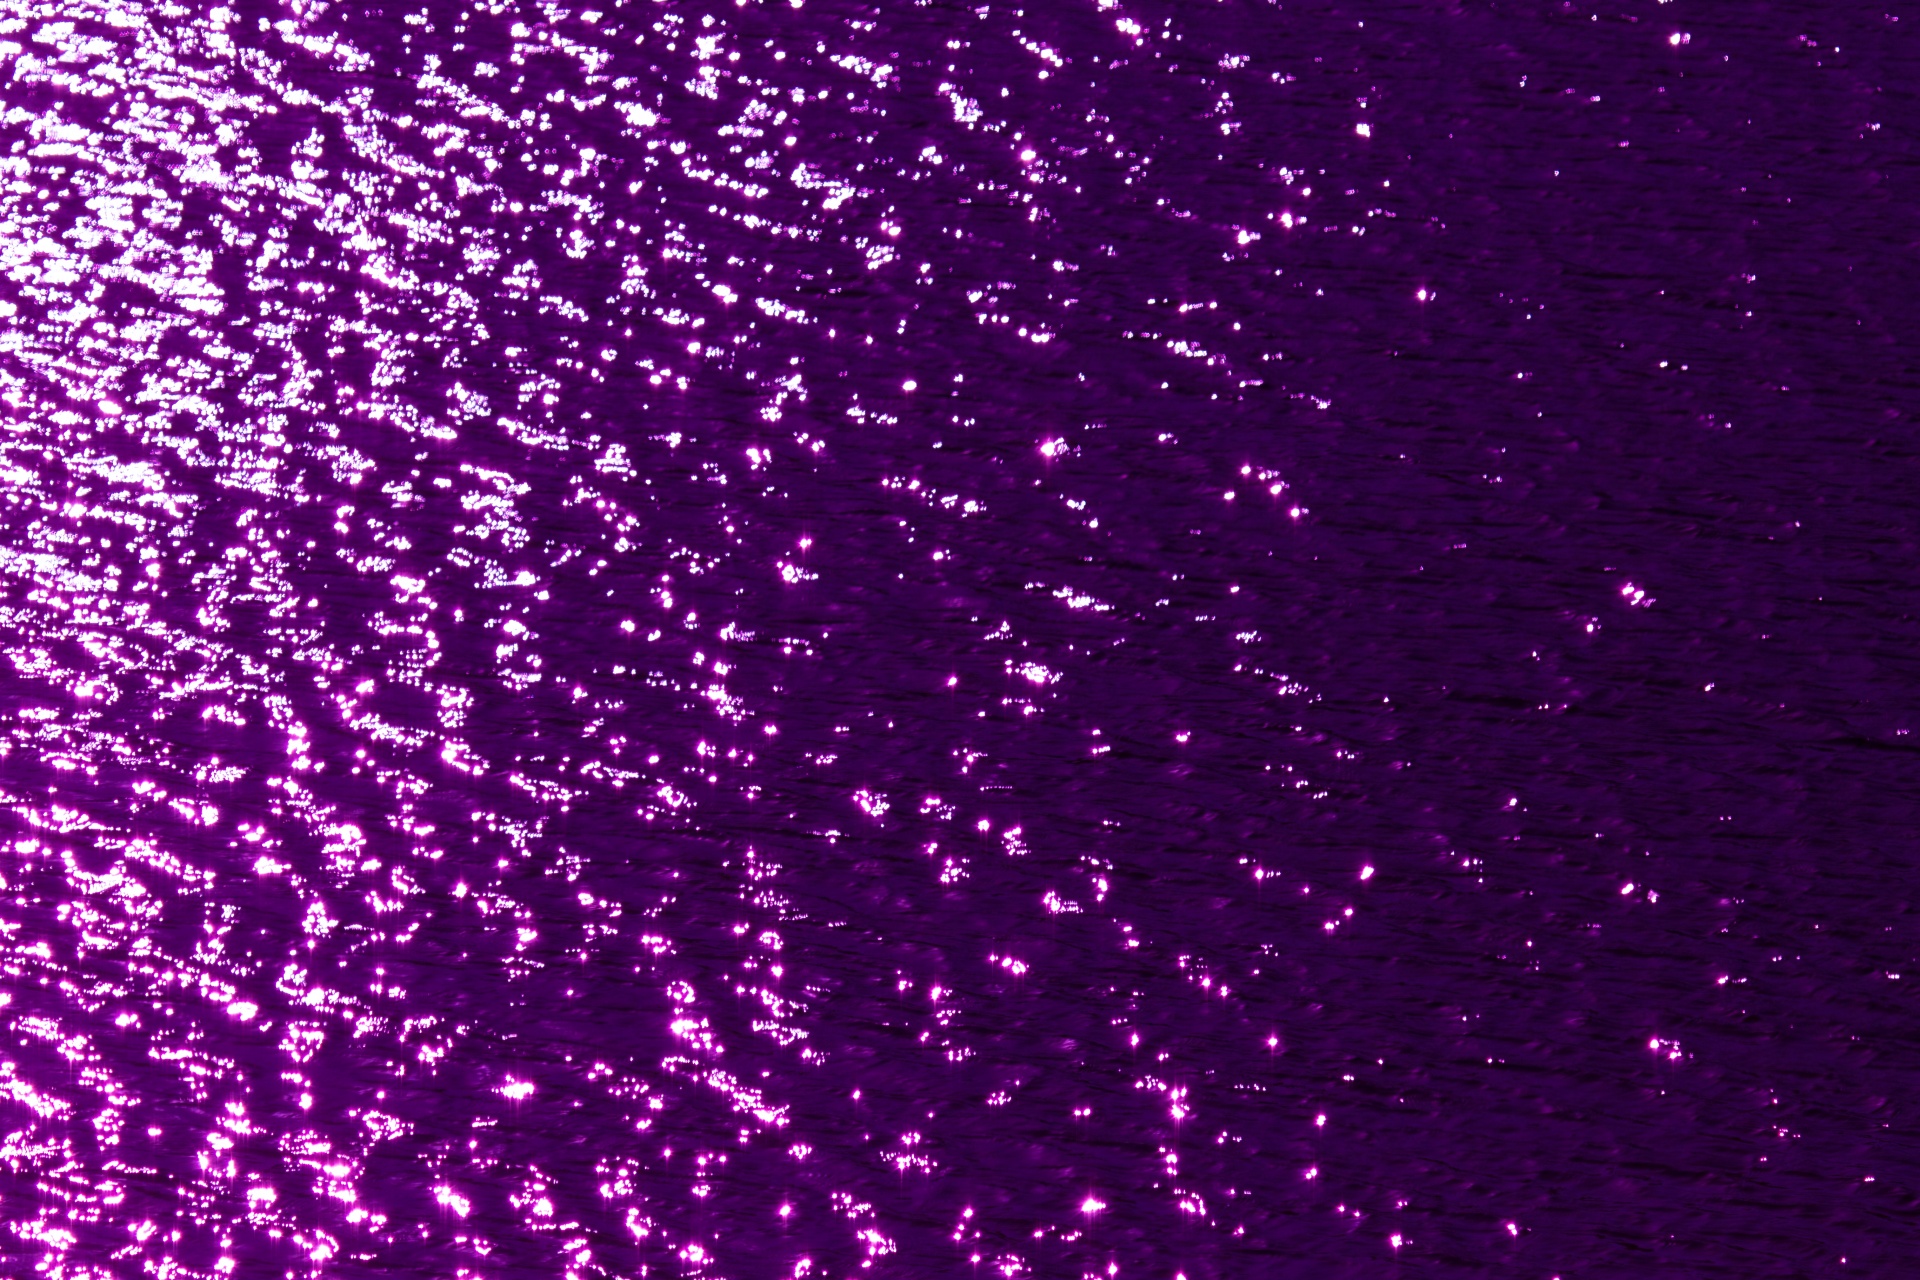 Purple Water Surface Reflection Free Stock Photo - Public Domain ...